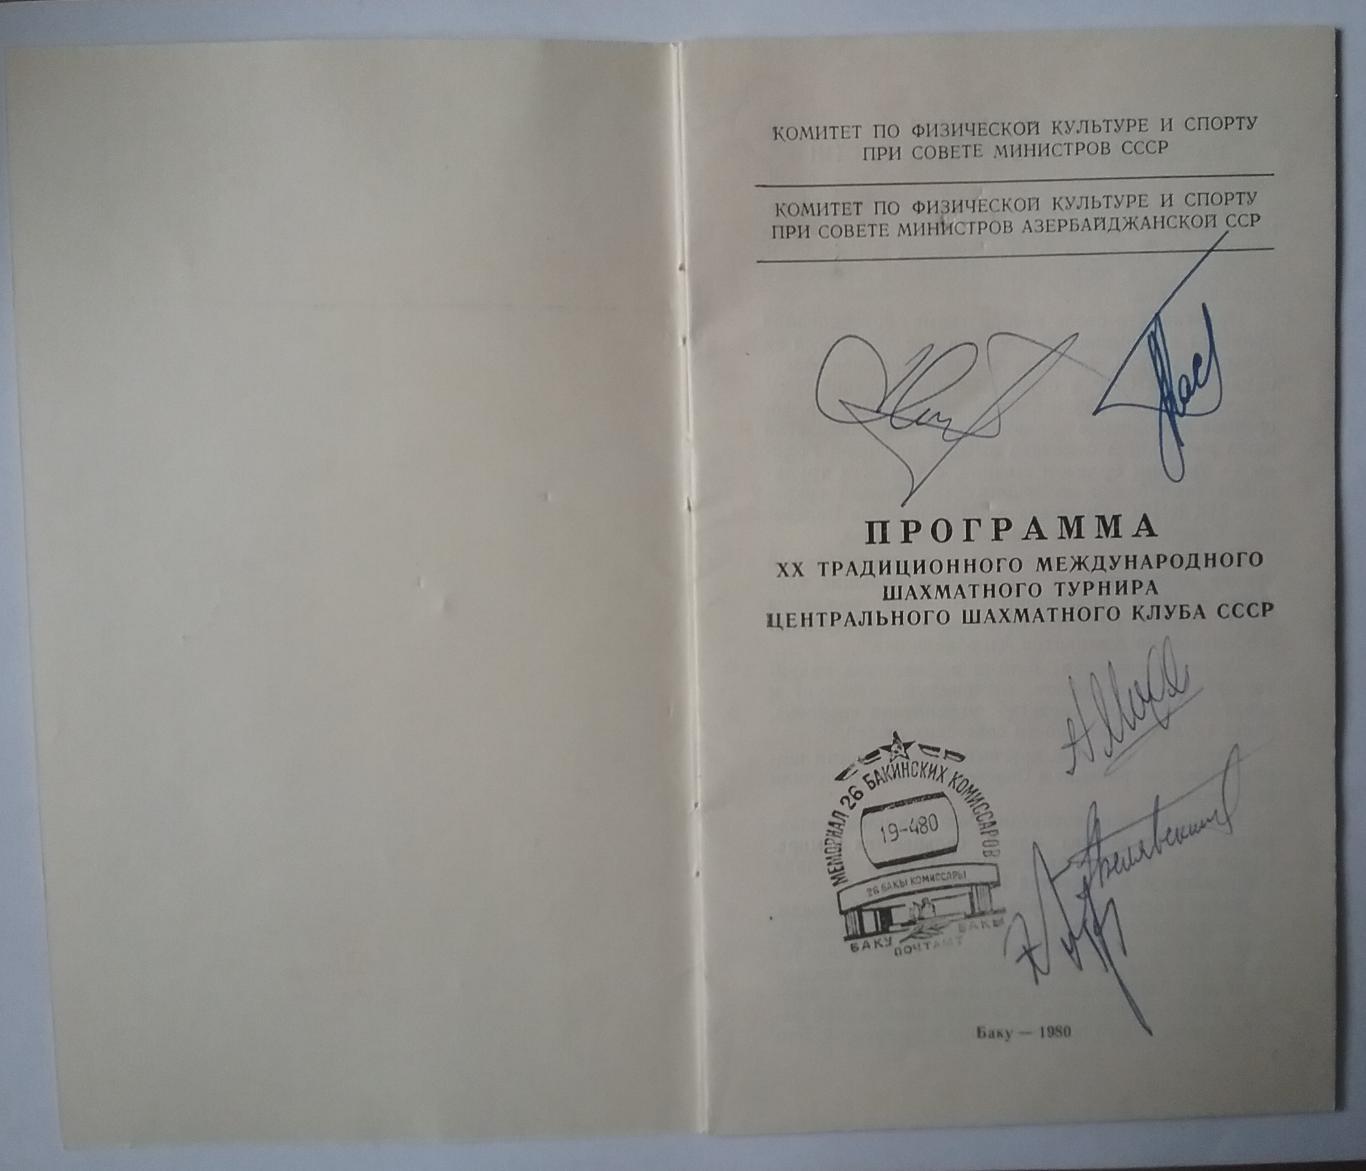 Автографы знаменитых шахматистов,1980г